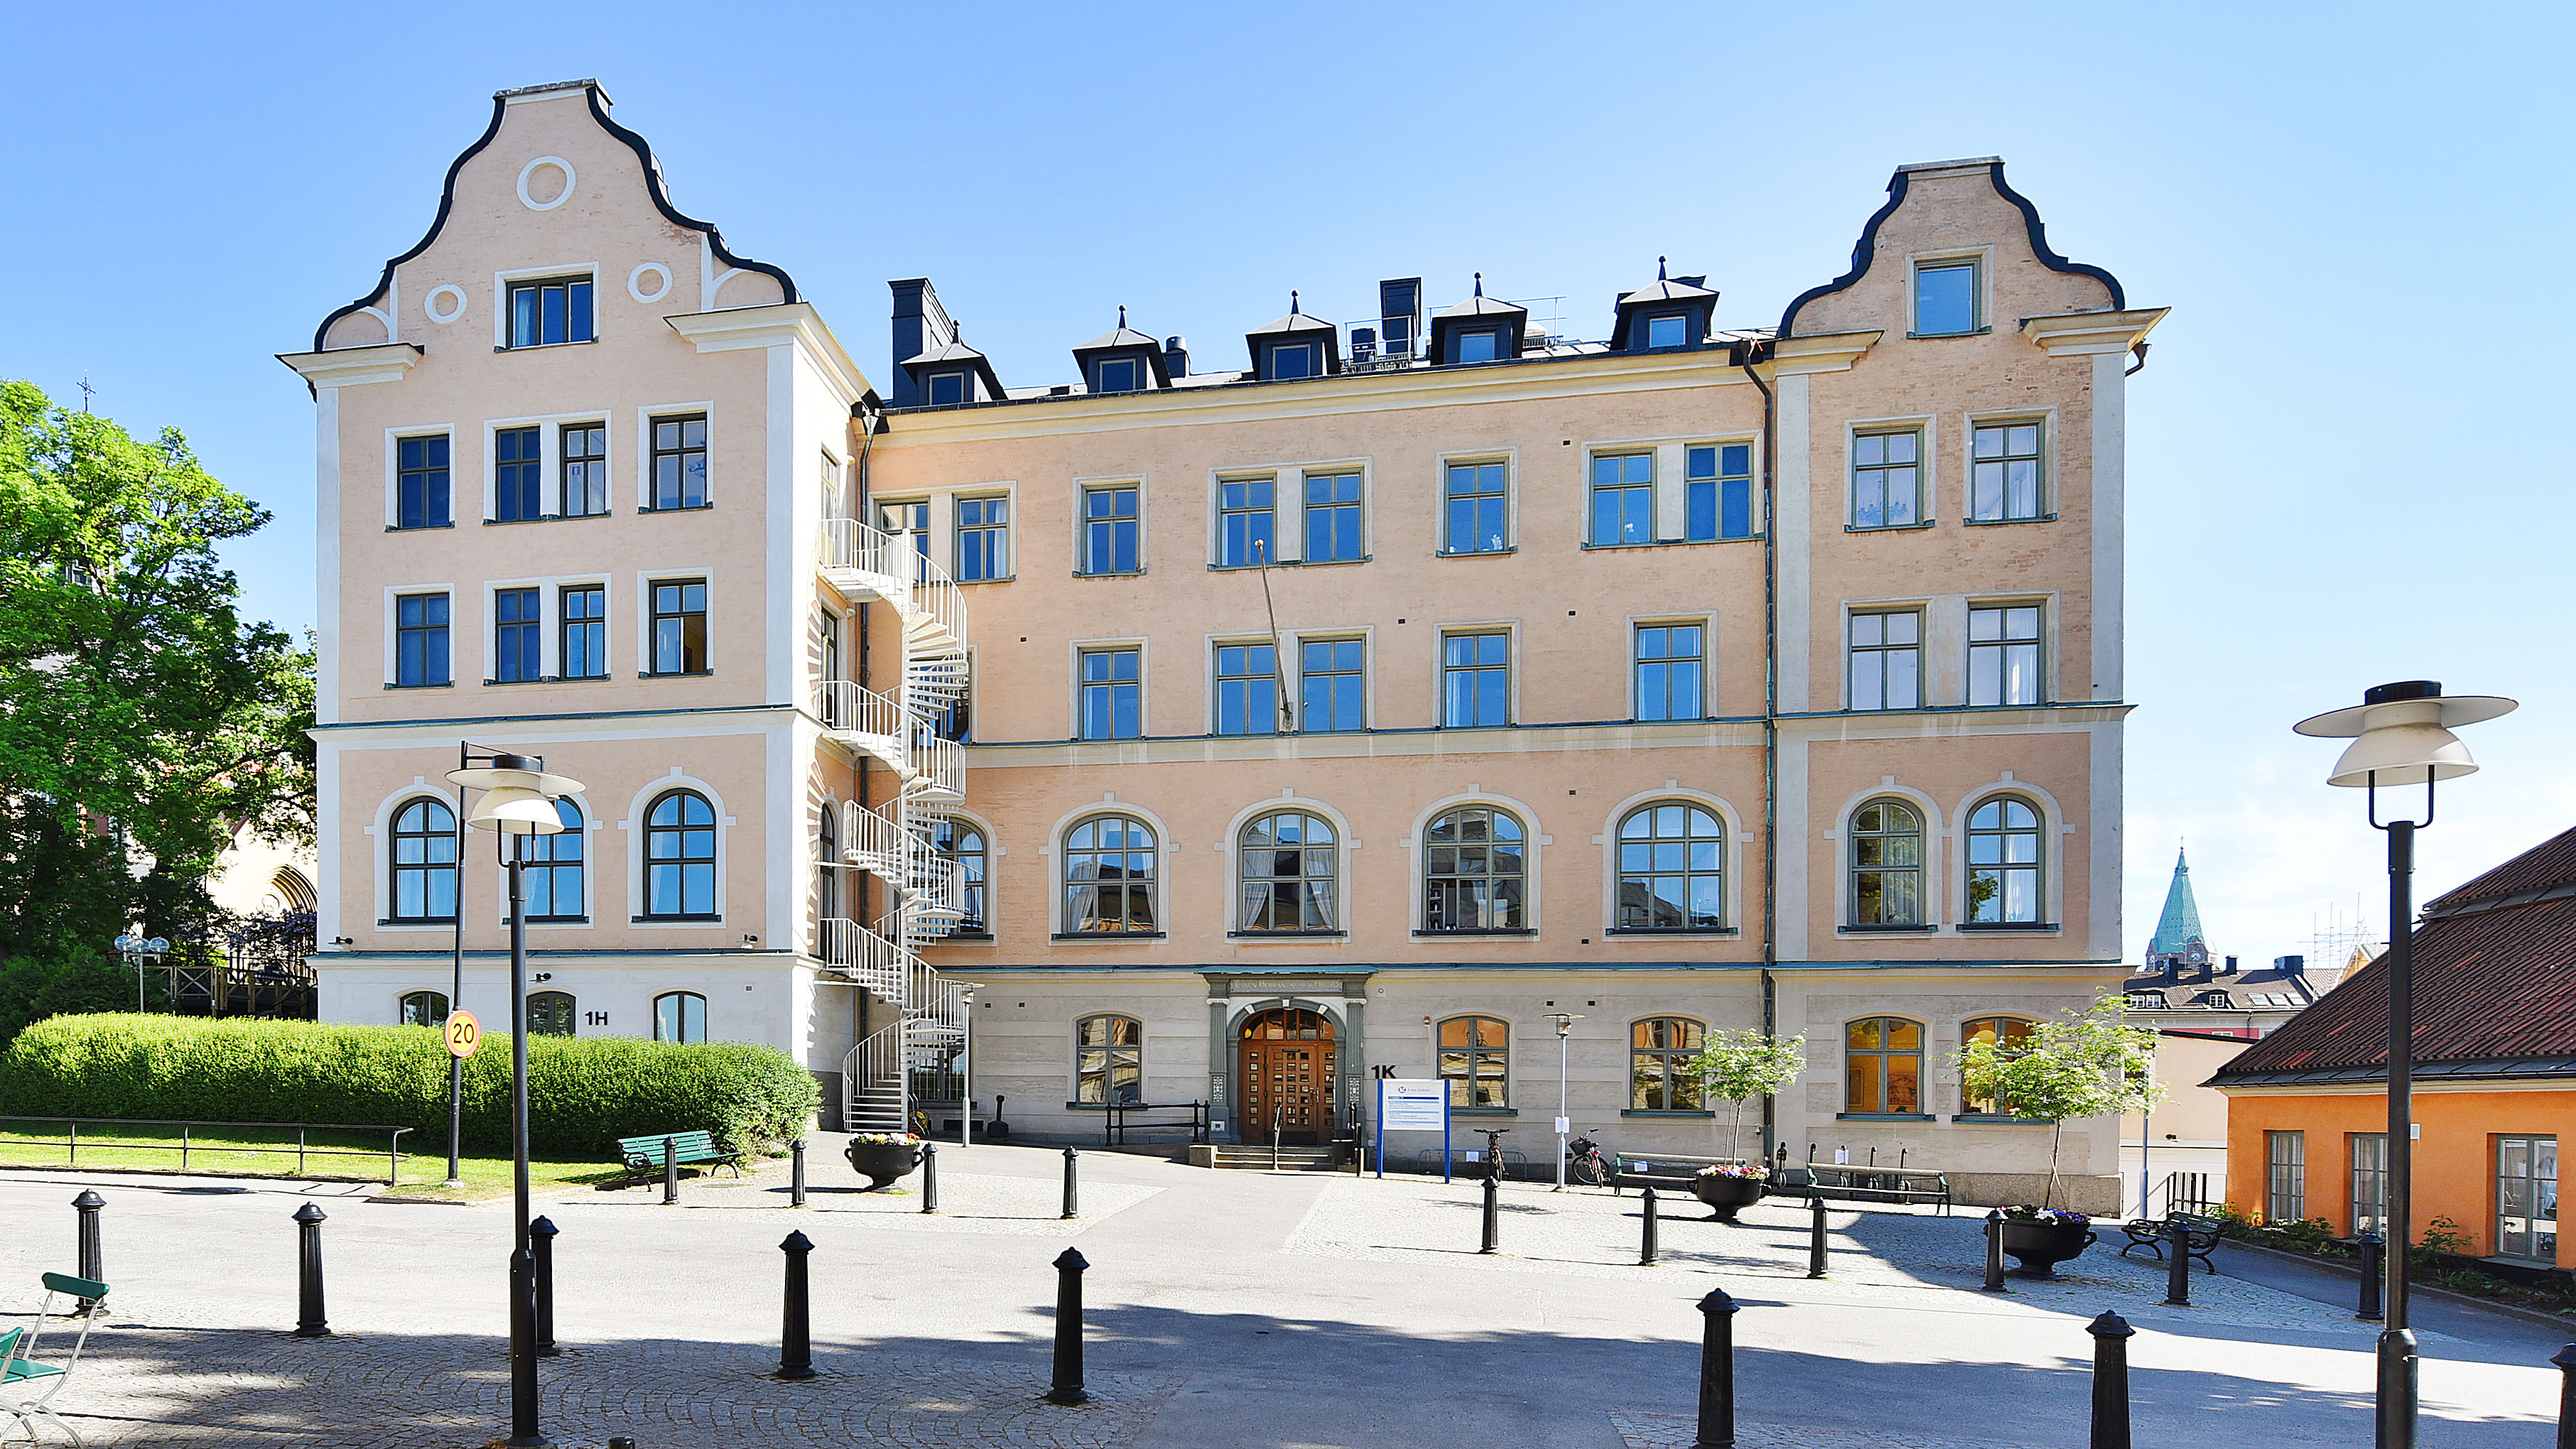 Ersta konferens ligger på Erstagatan 1K i det så kallade stora diakonisshuset från 1896.